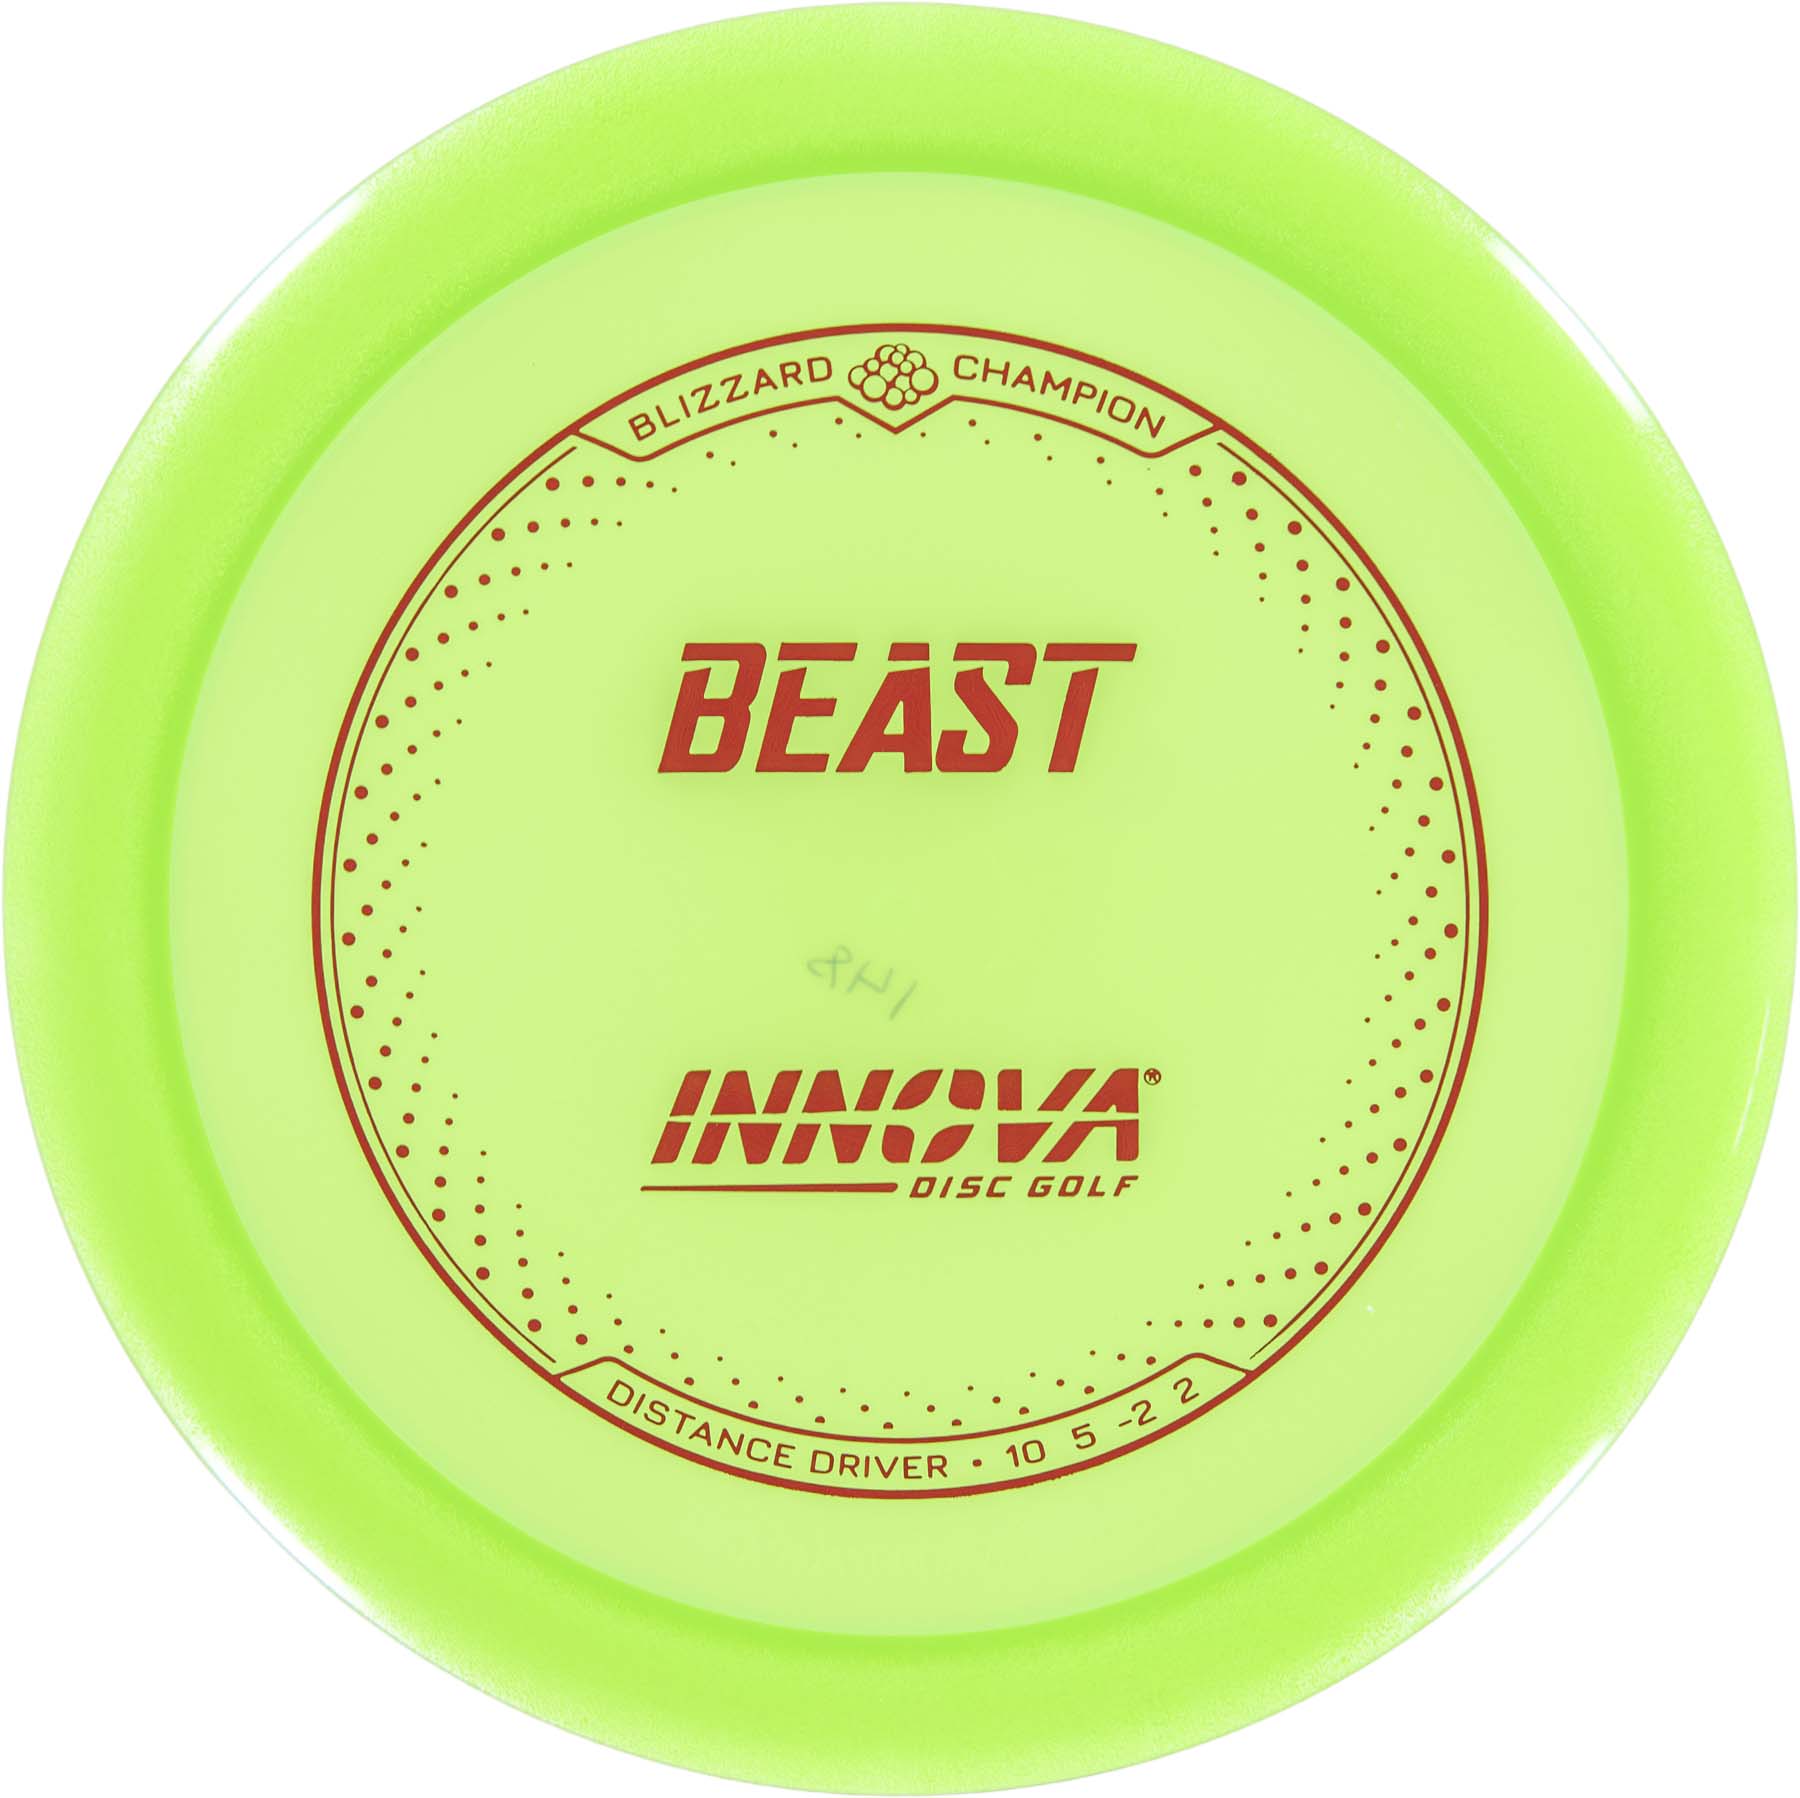 Innova Blizzard Beast - Light Weight Distance Driver. Neon green color.